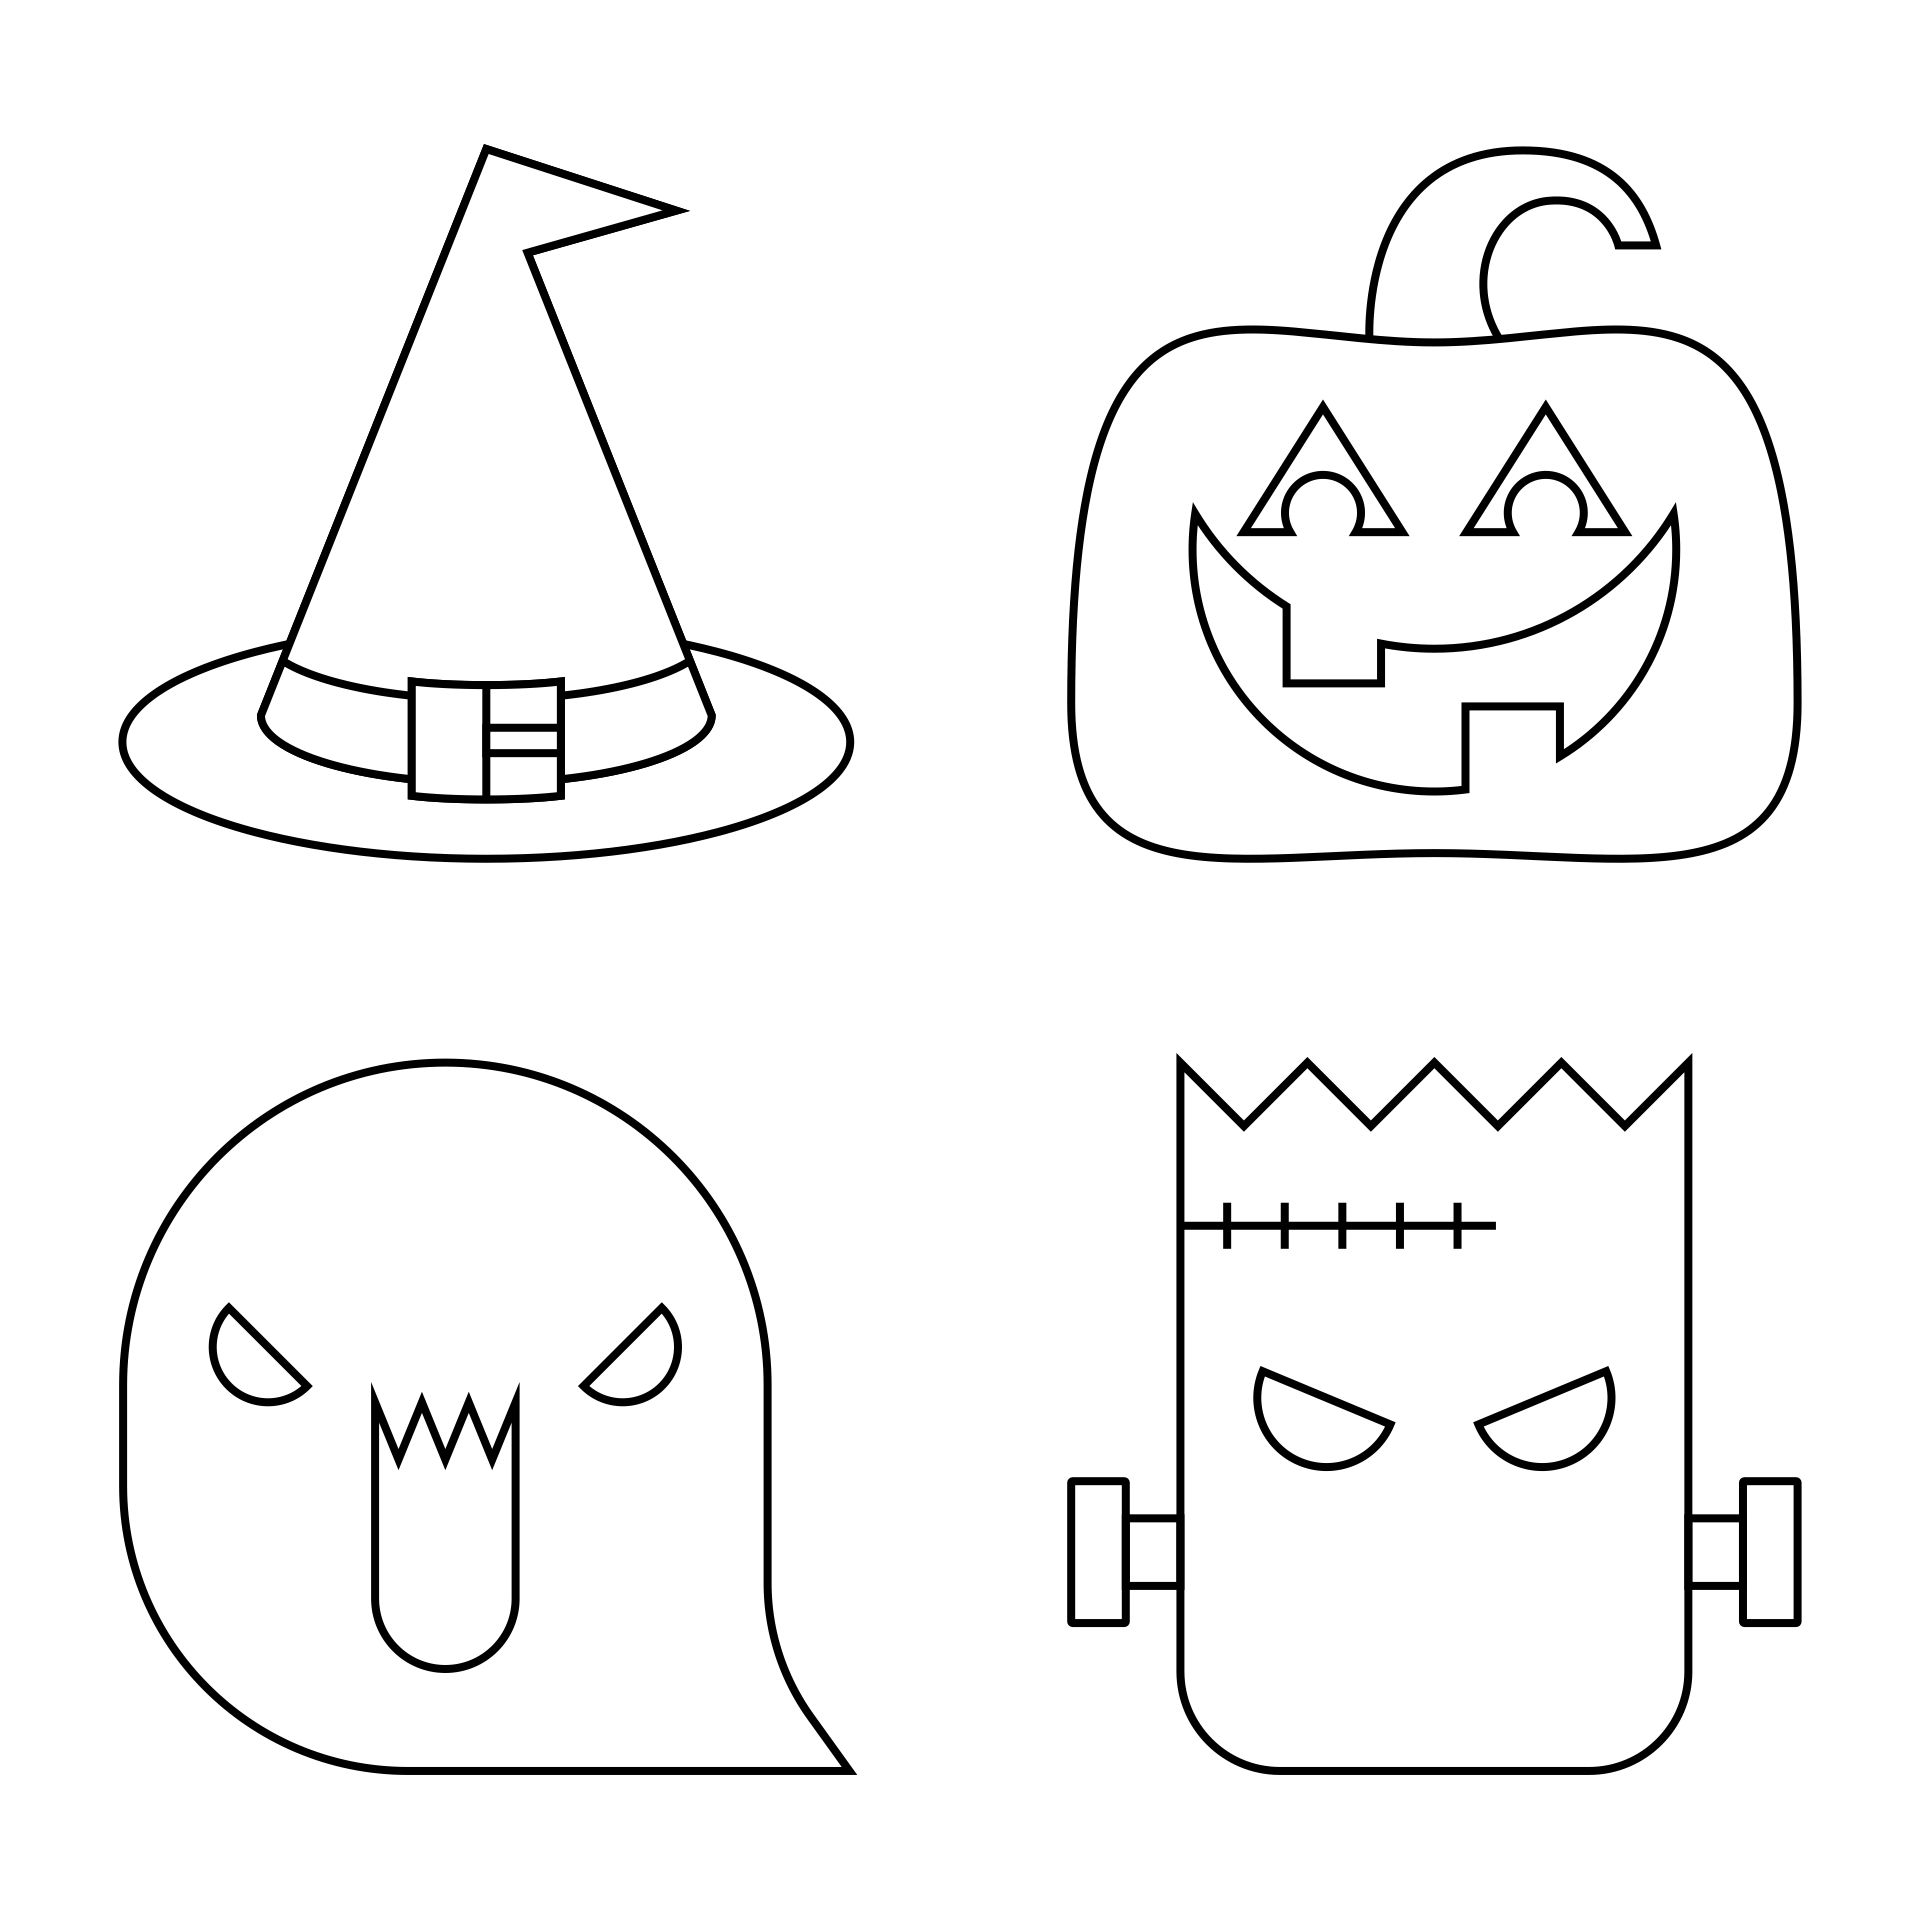 5 Best Images Of Free Printable Halloween Stencils Free Printable Halloween Stencils Cut Out